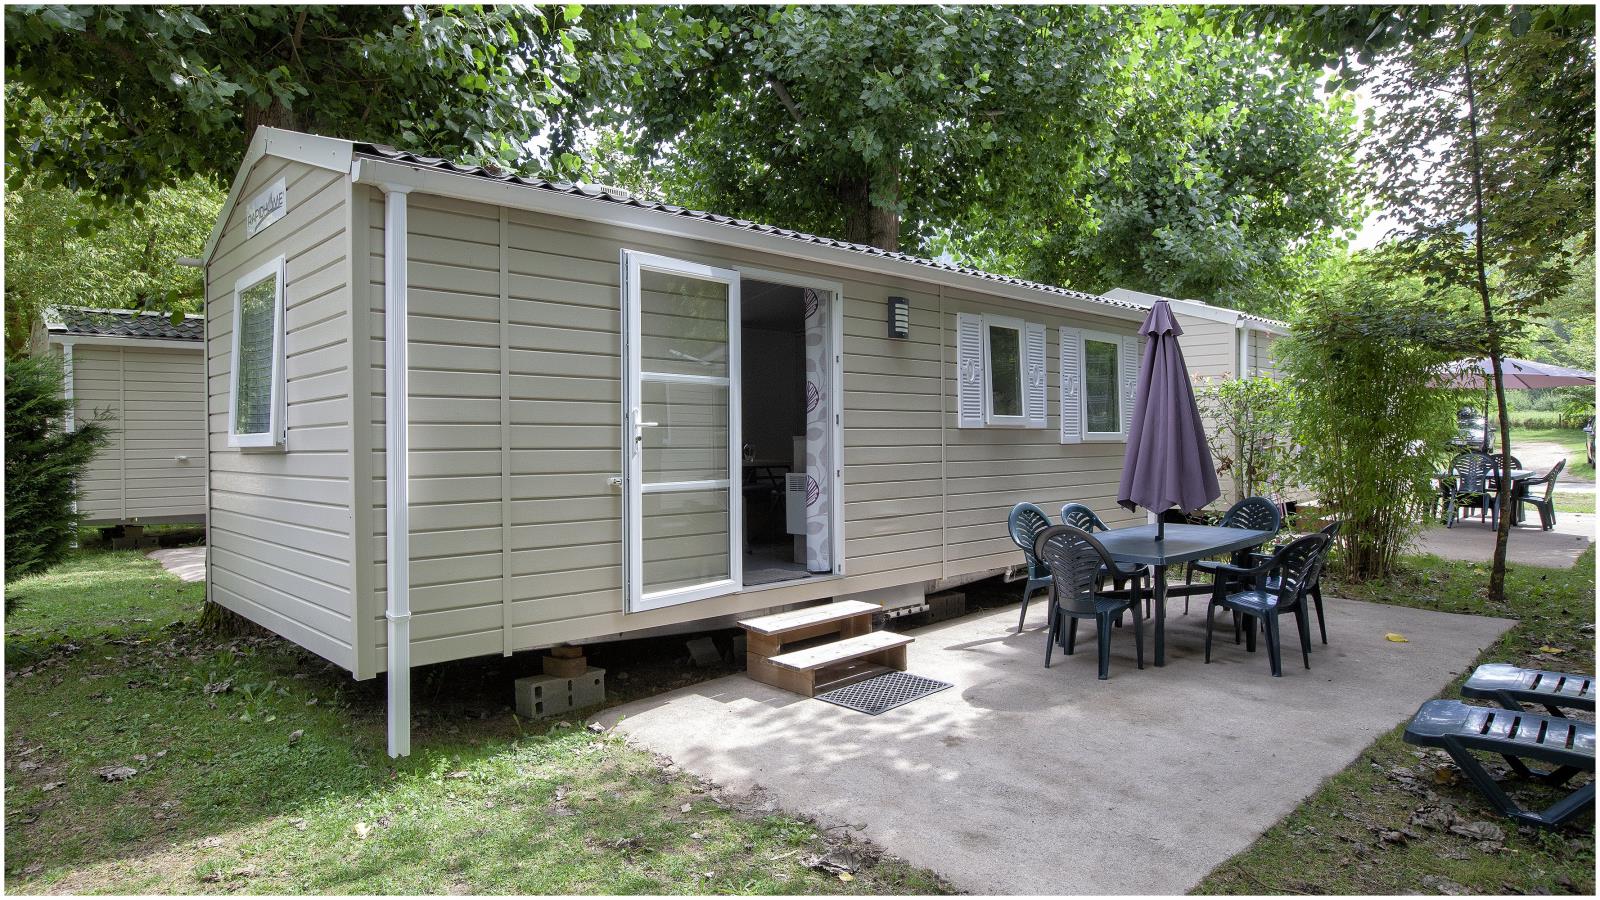 Huuraccommodatie - Mobil Home Lodge (Année 2015) - 23M² - Dimanche 4/5 Pers. - Camping Saint-Pal